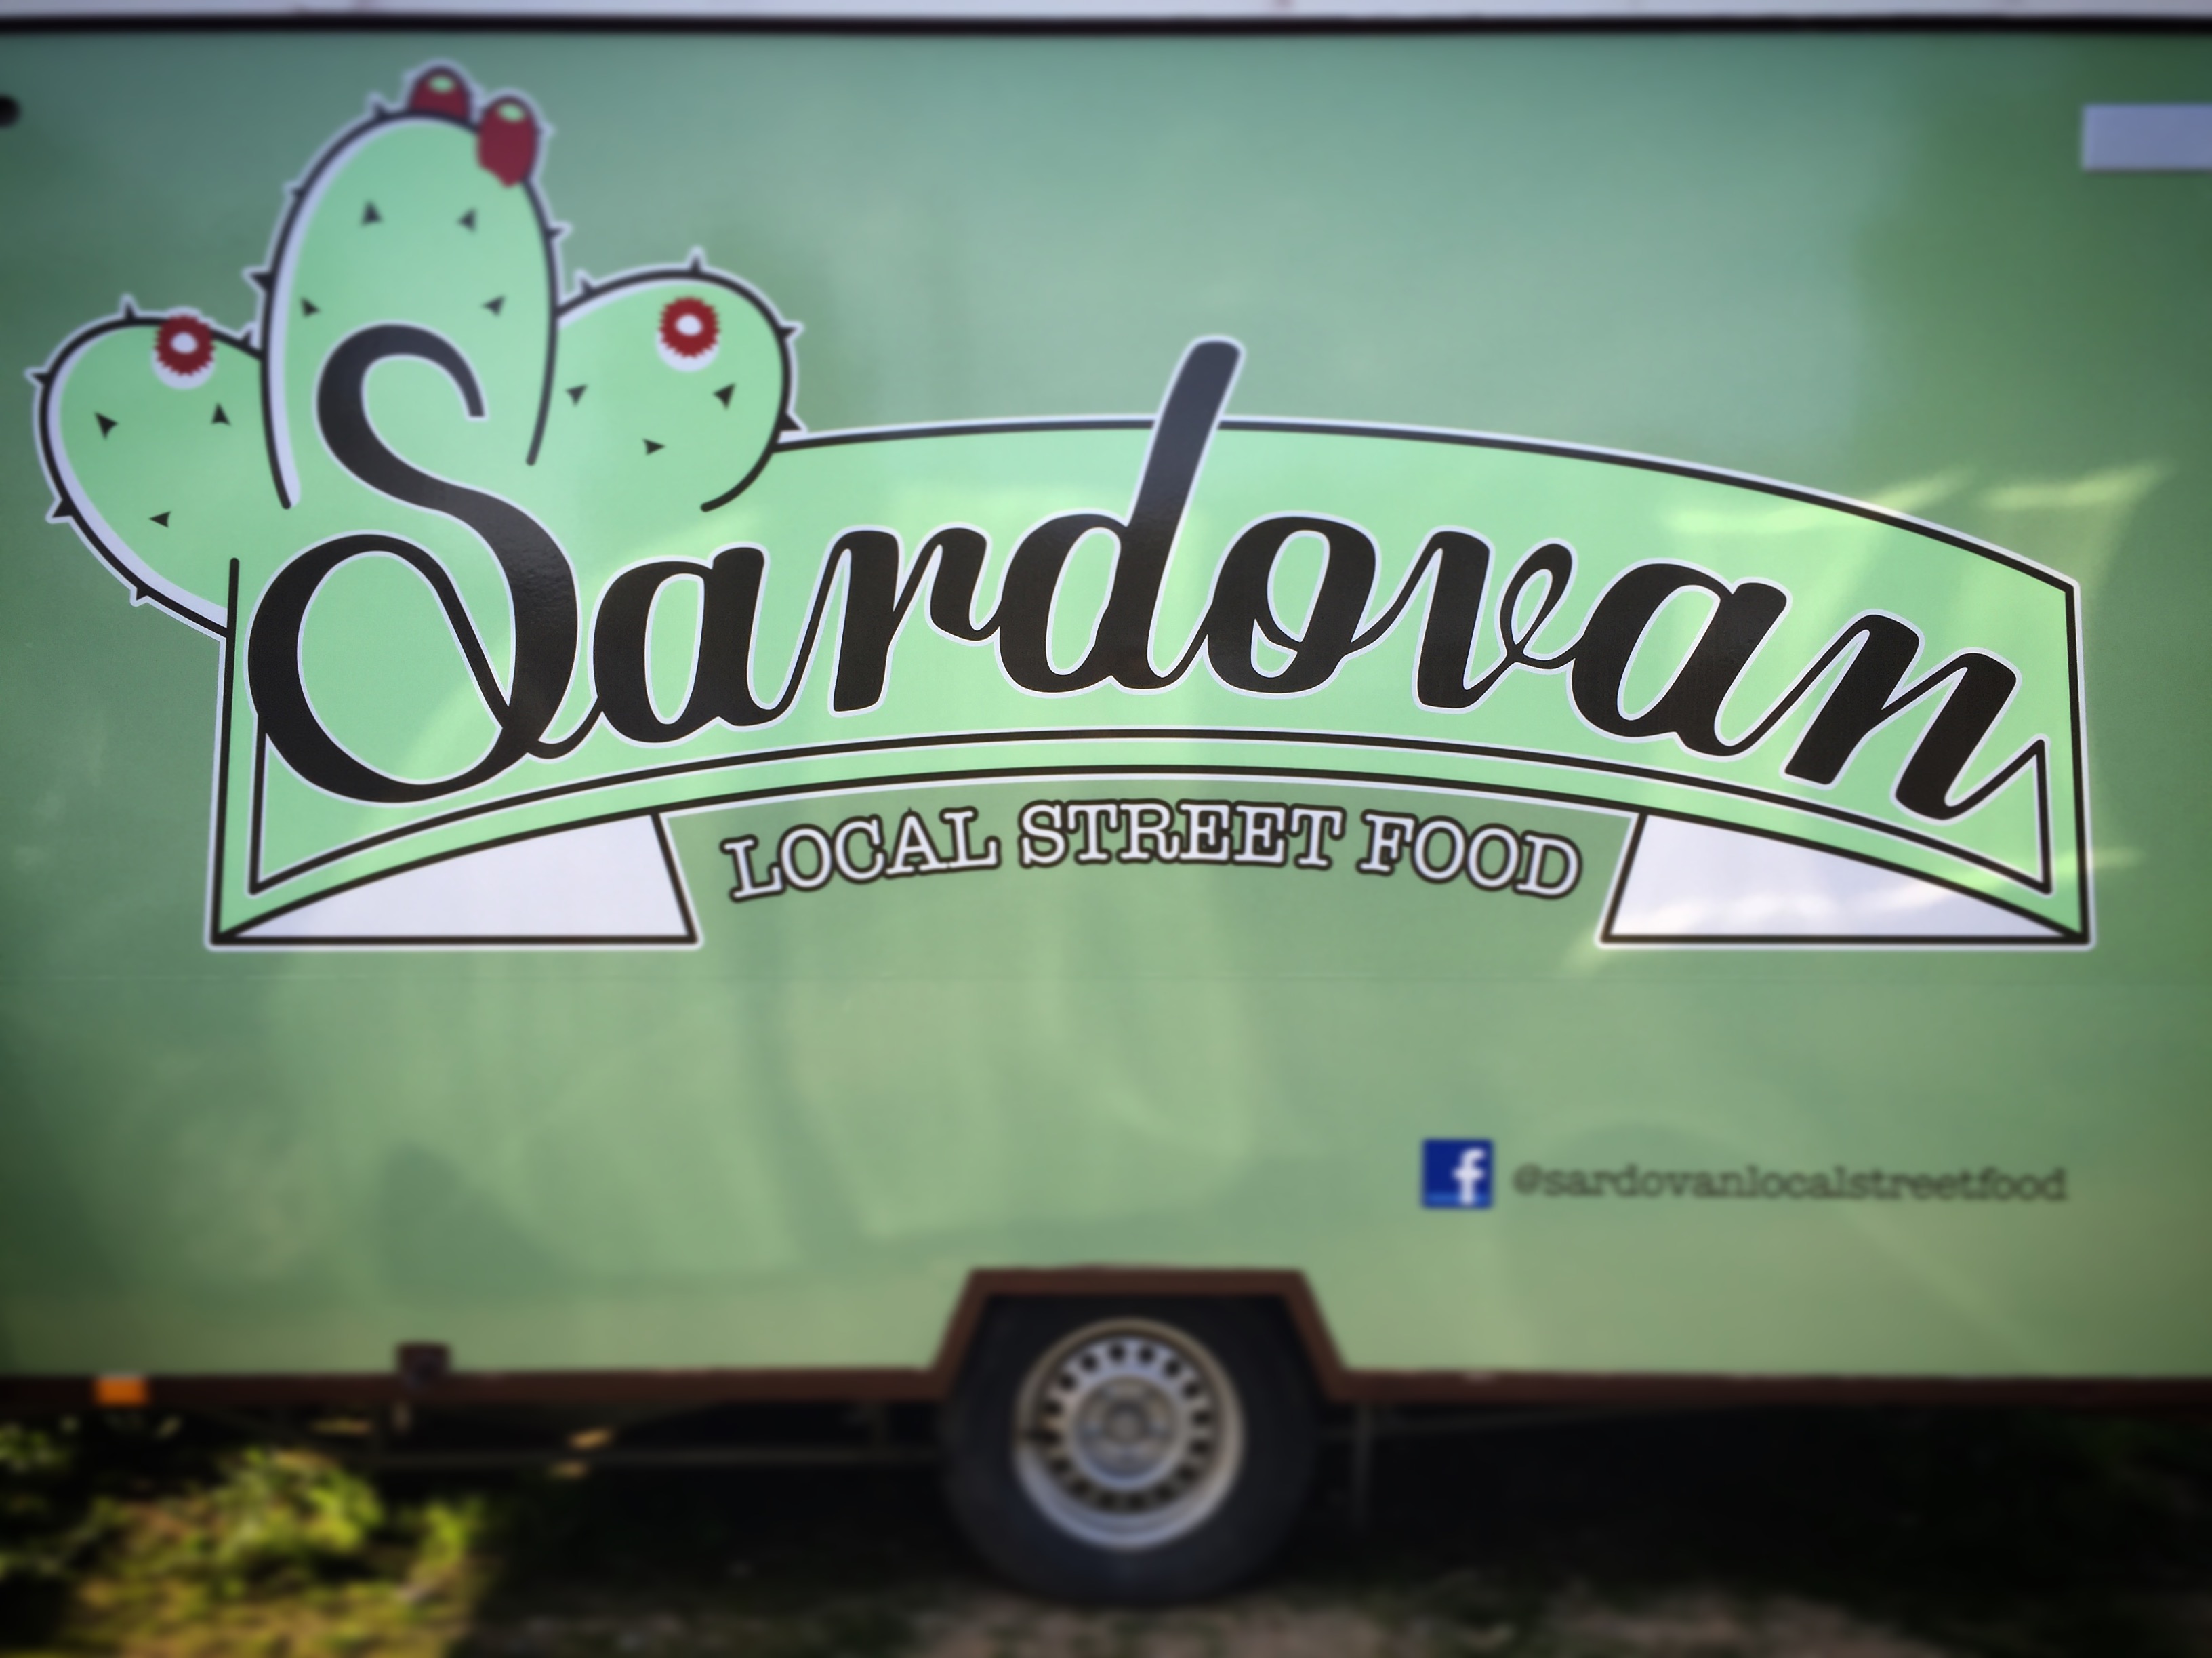 sardovan truck